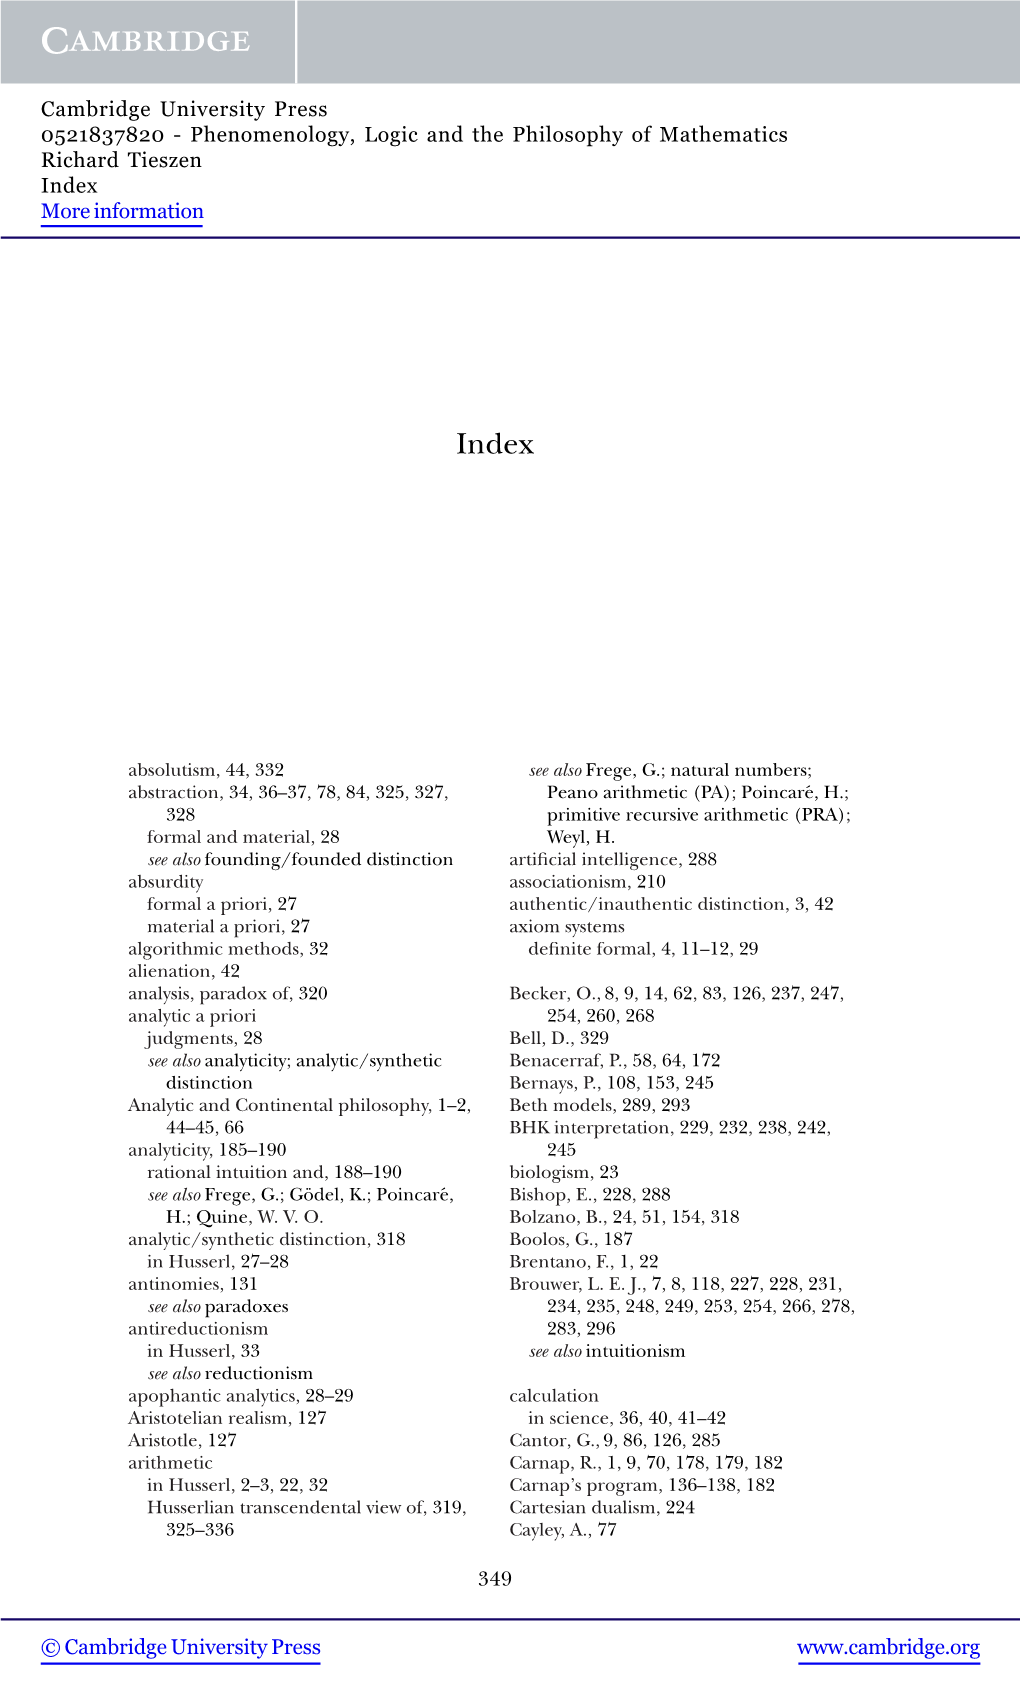 Phenomenology, Logic and the Philosophy of Mathematics Richard Tieszen Index More Information